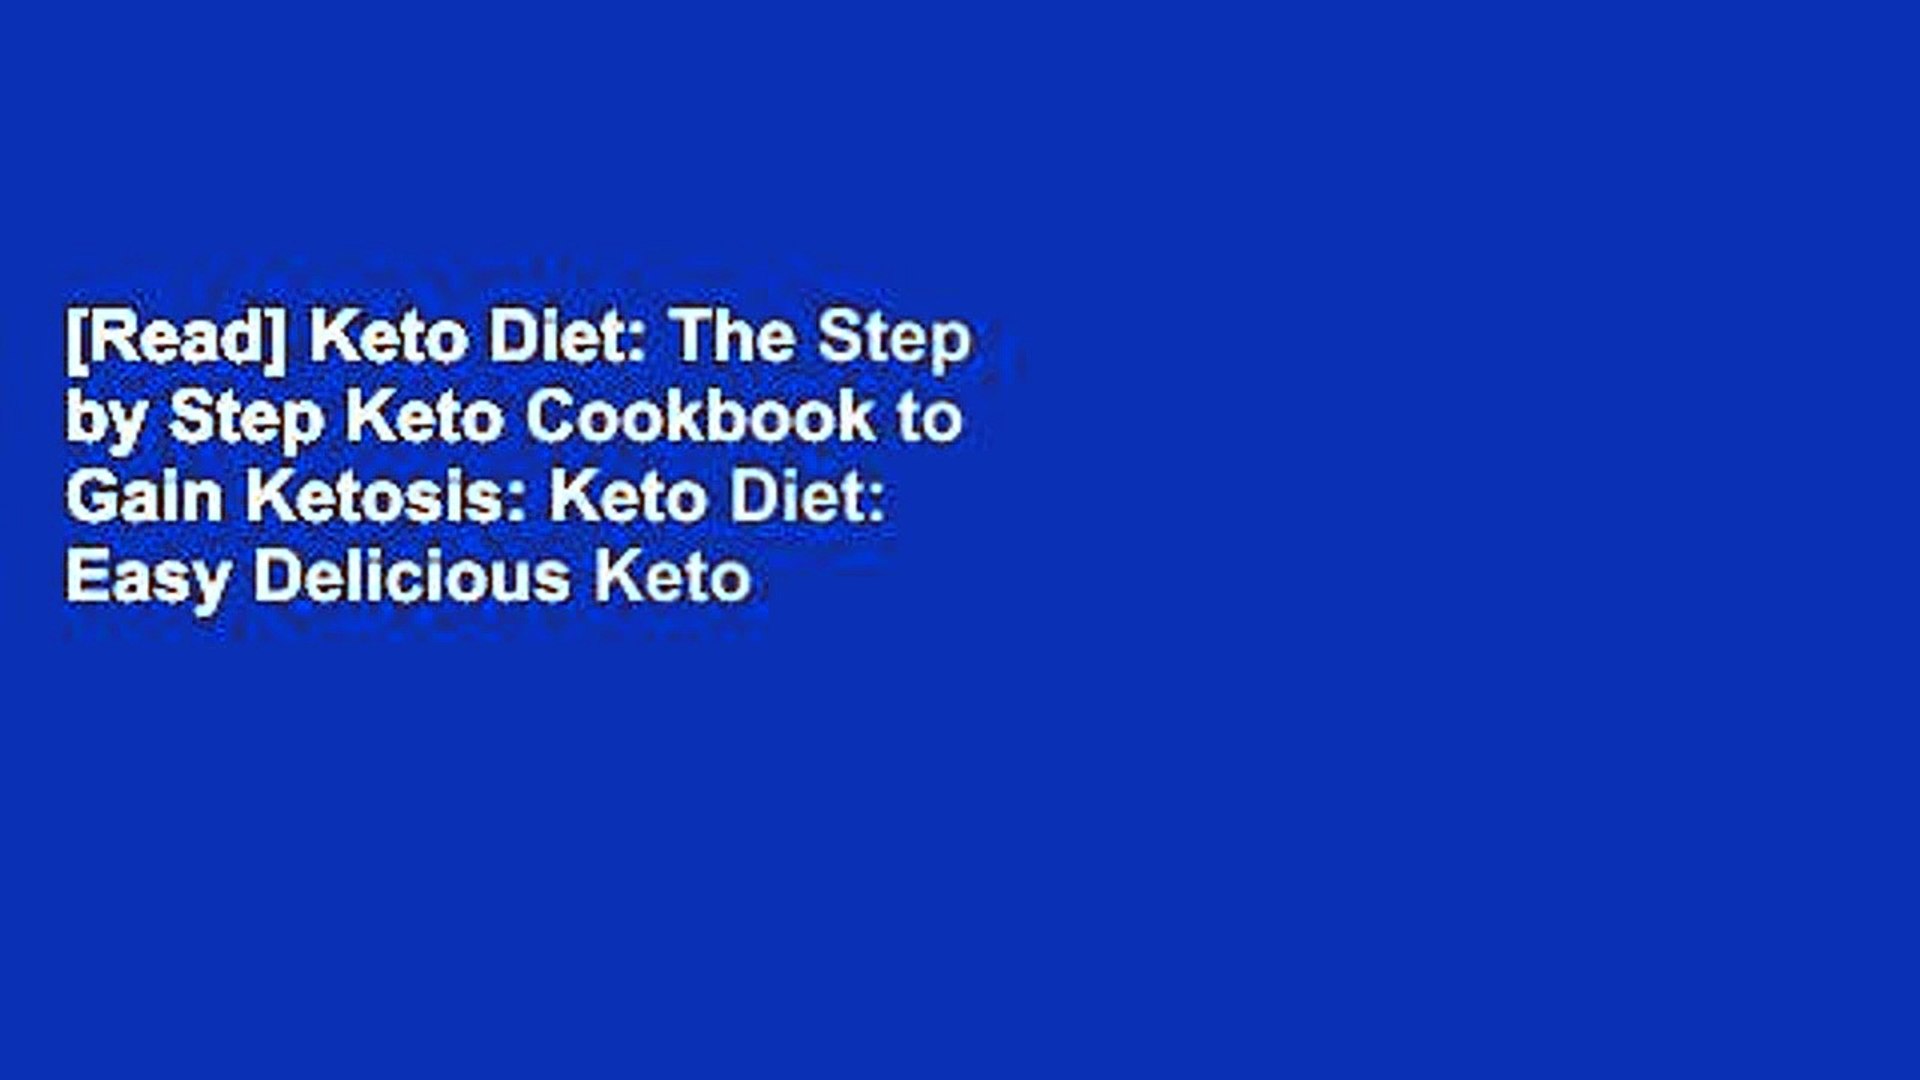 [Read] Keto Diet: The Step by Step Keto Cookbook to Gain Ketosis: Keto Diet: Easy Delicious Keto